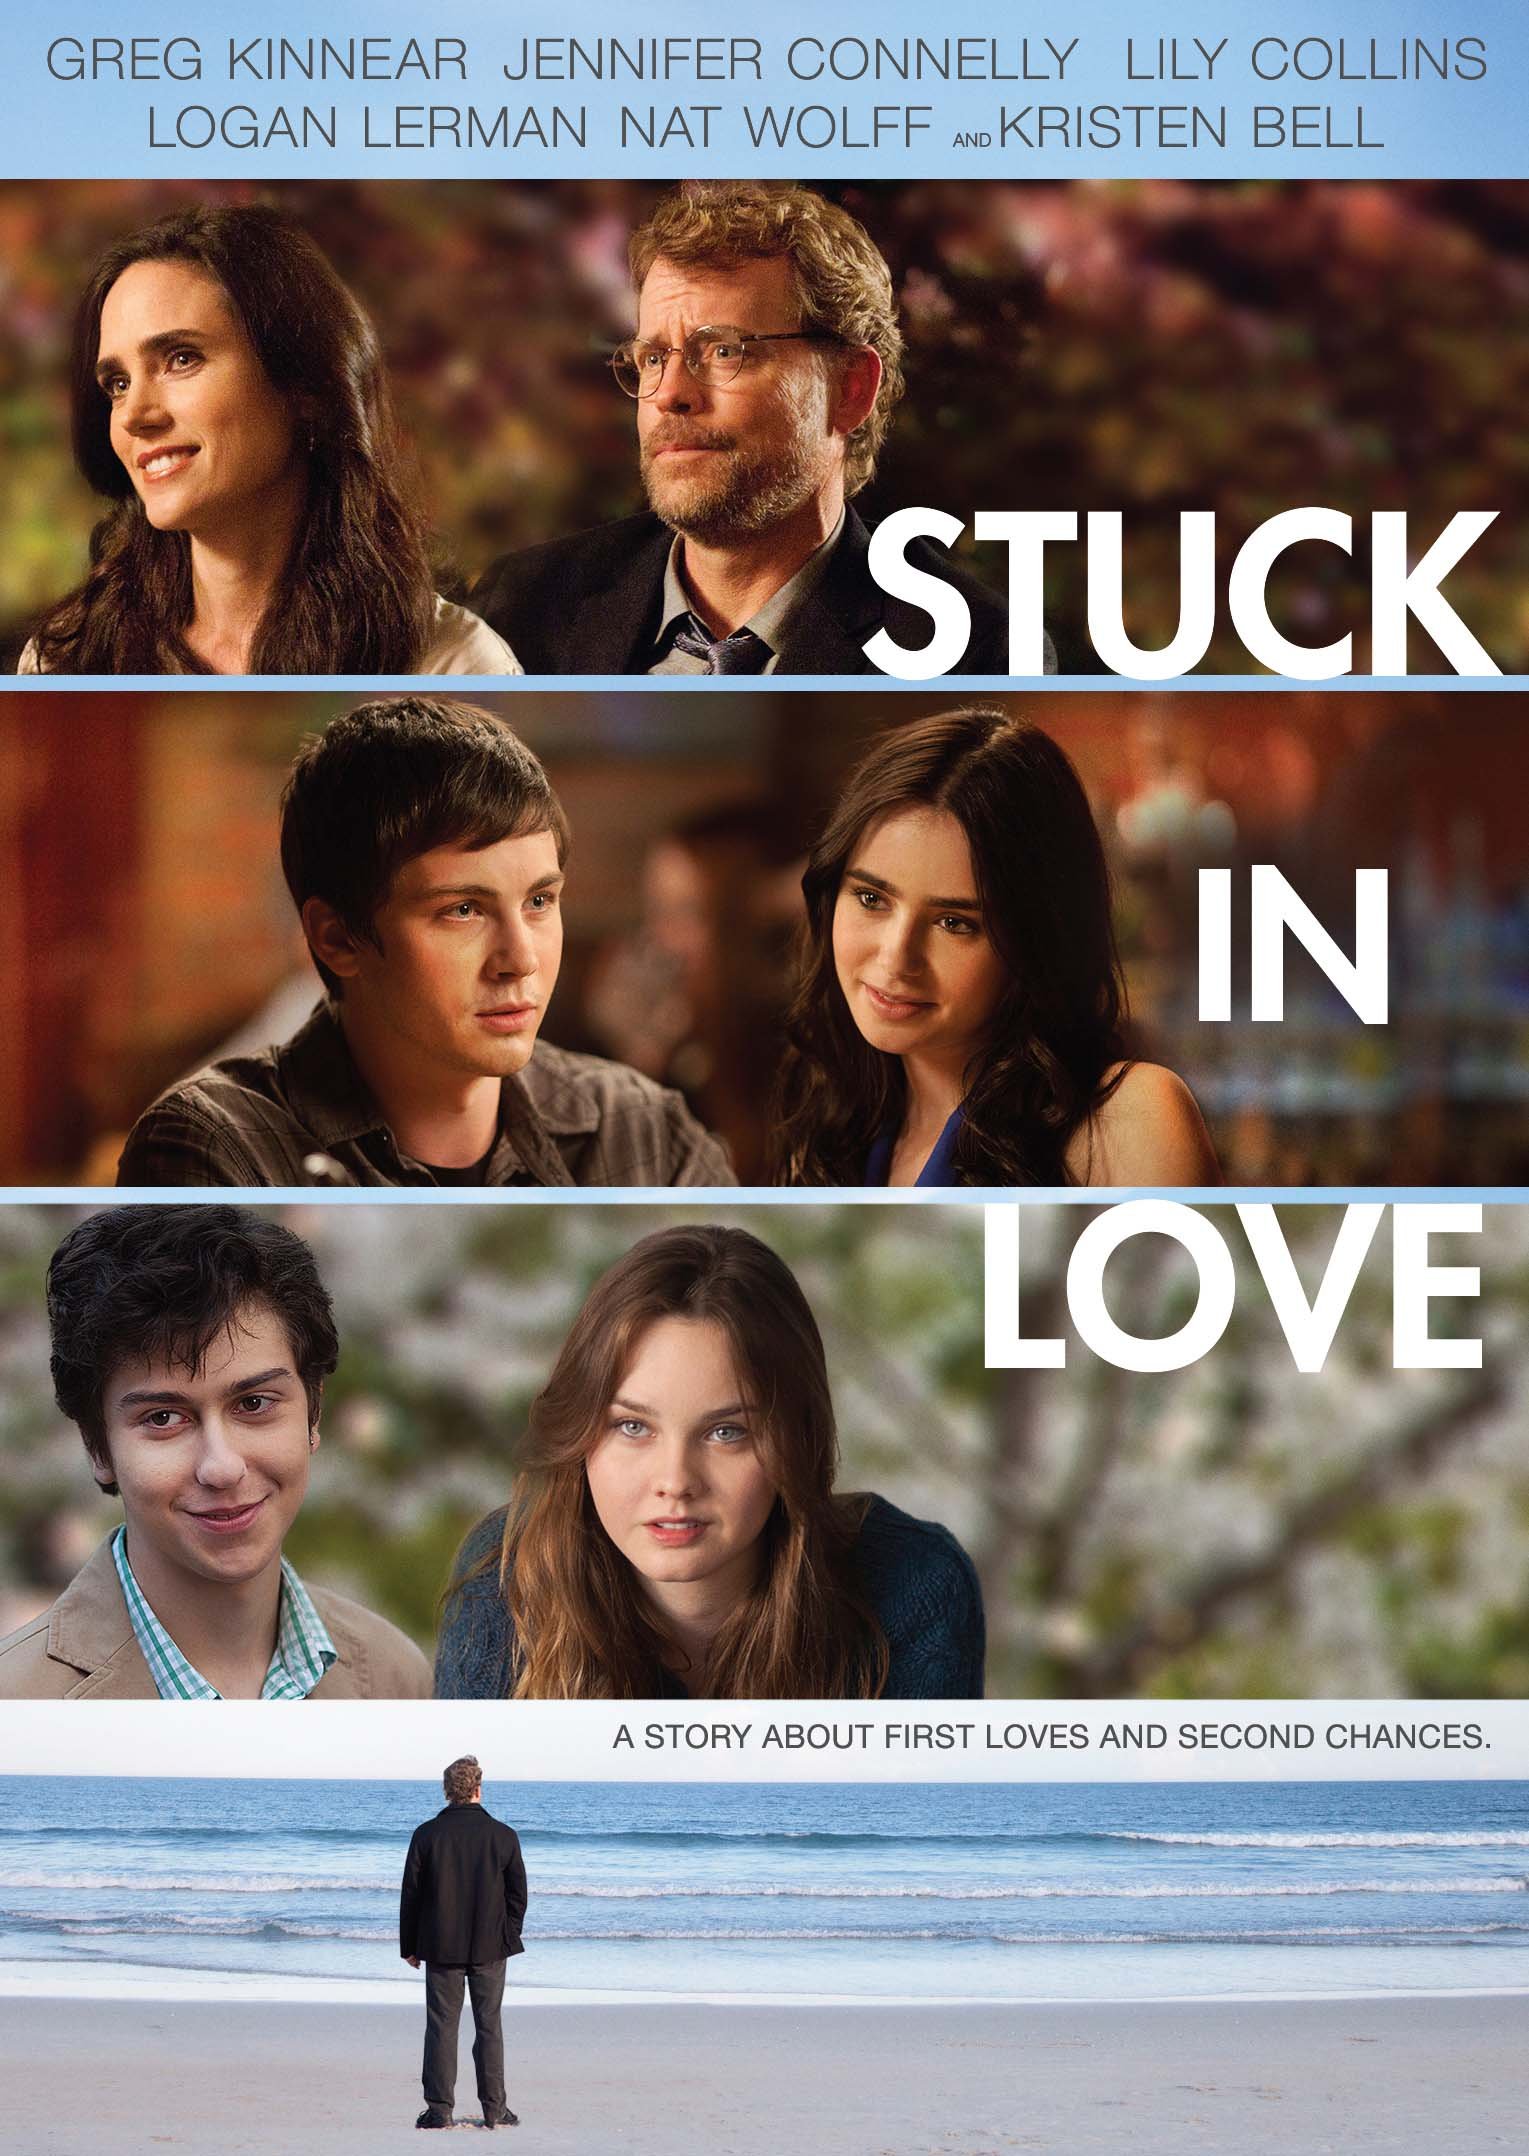 Stiahni si Filmy s titulkama Spisovatele / Stuck in Love (2012) = CSFD 77%